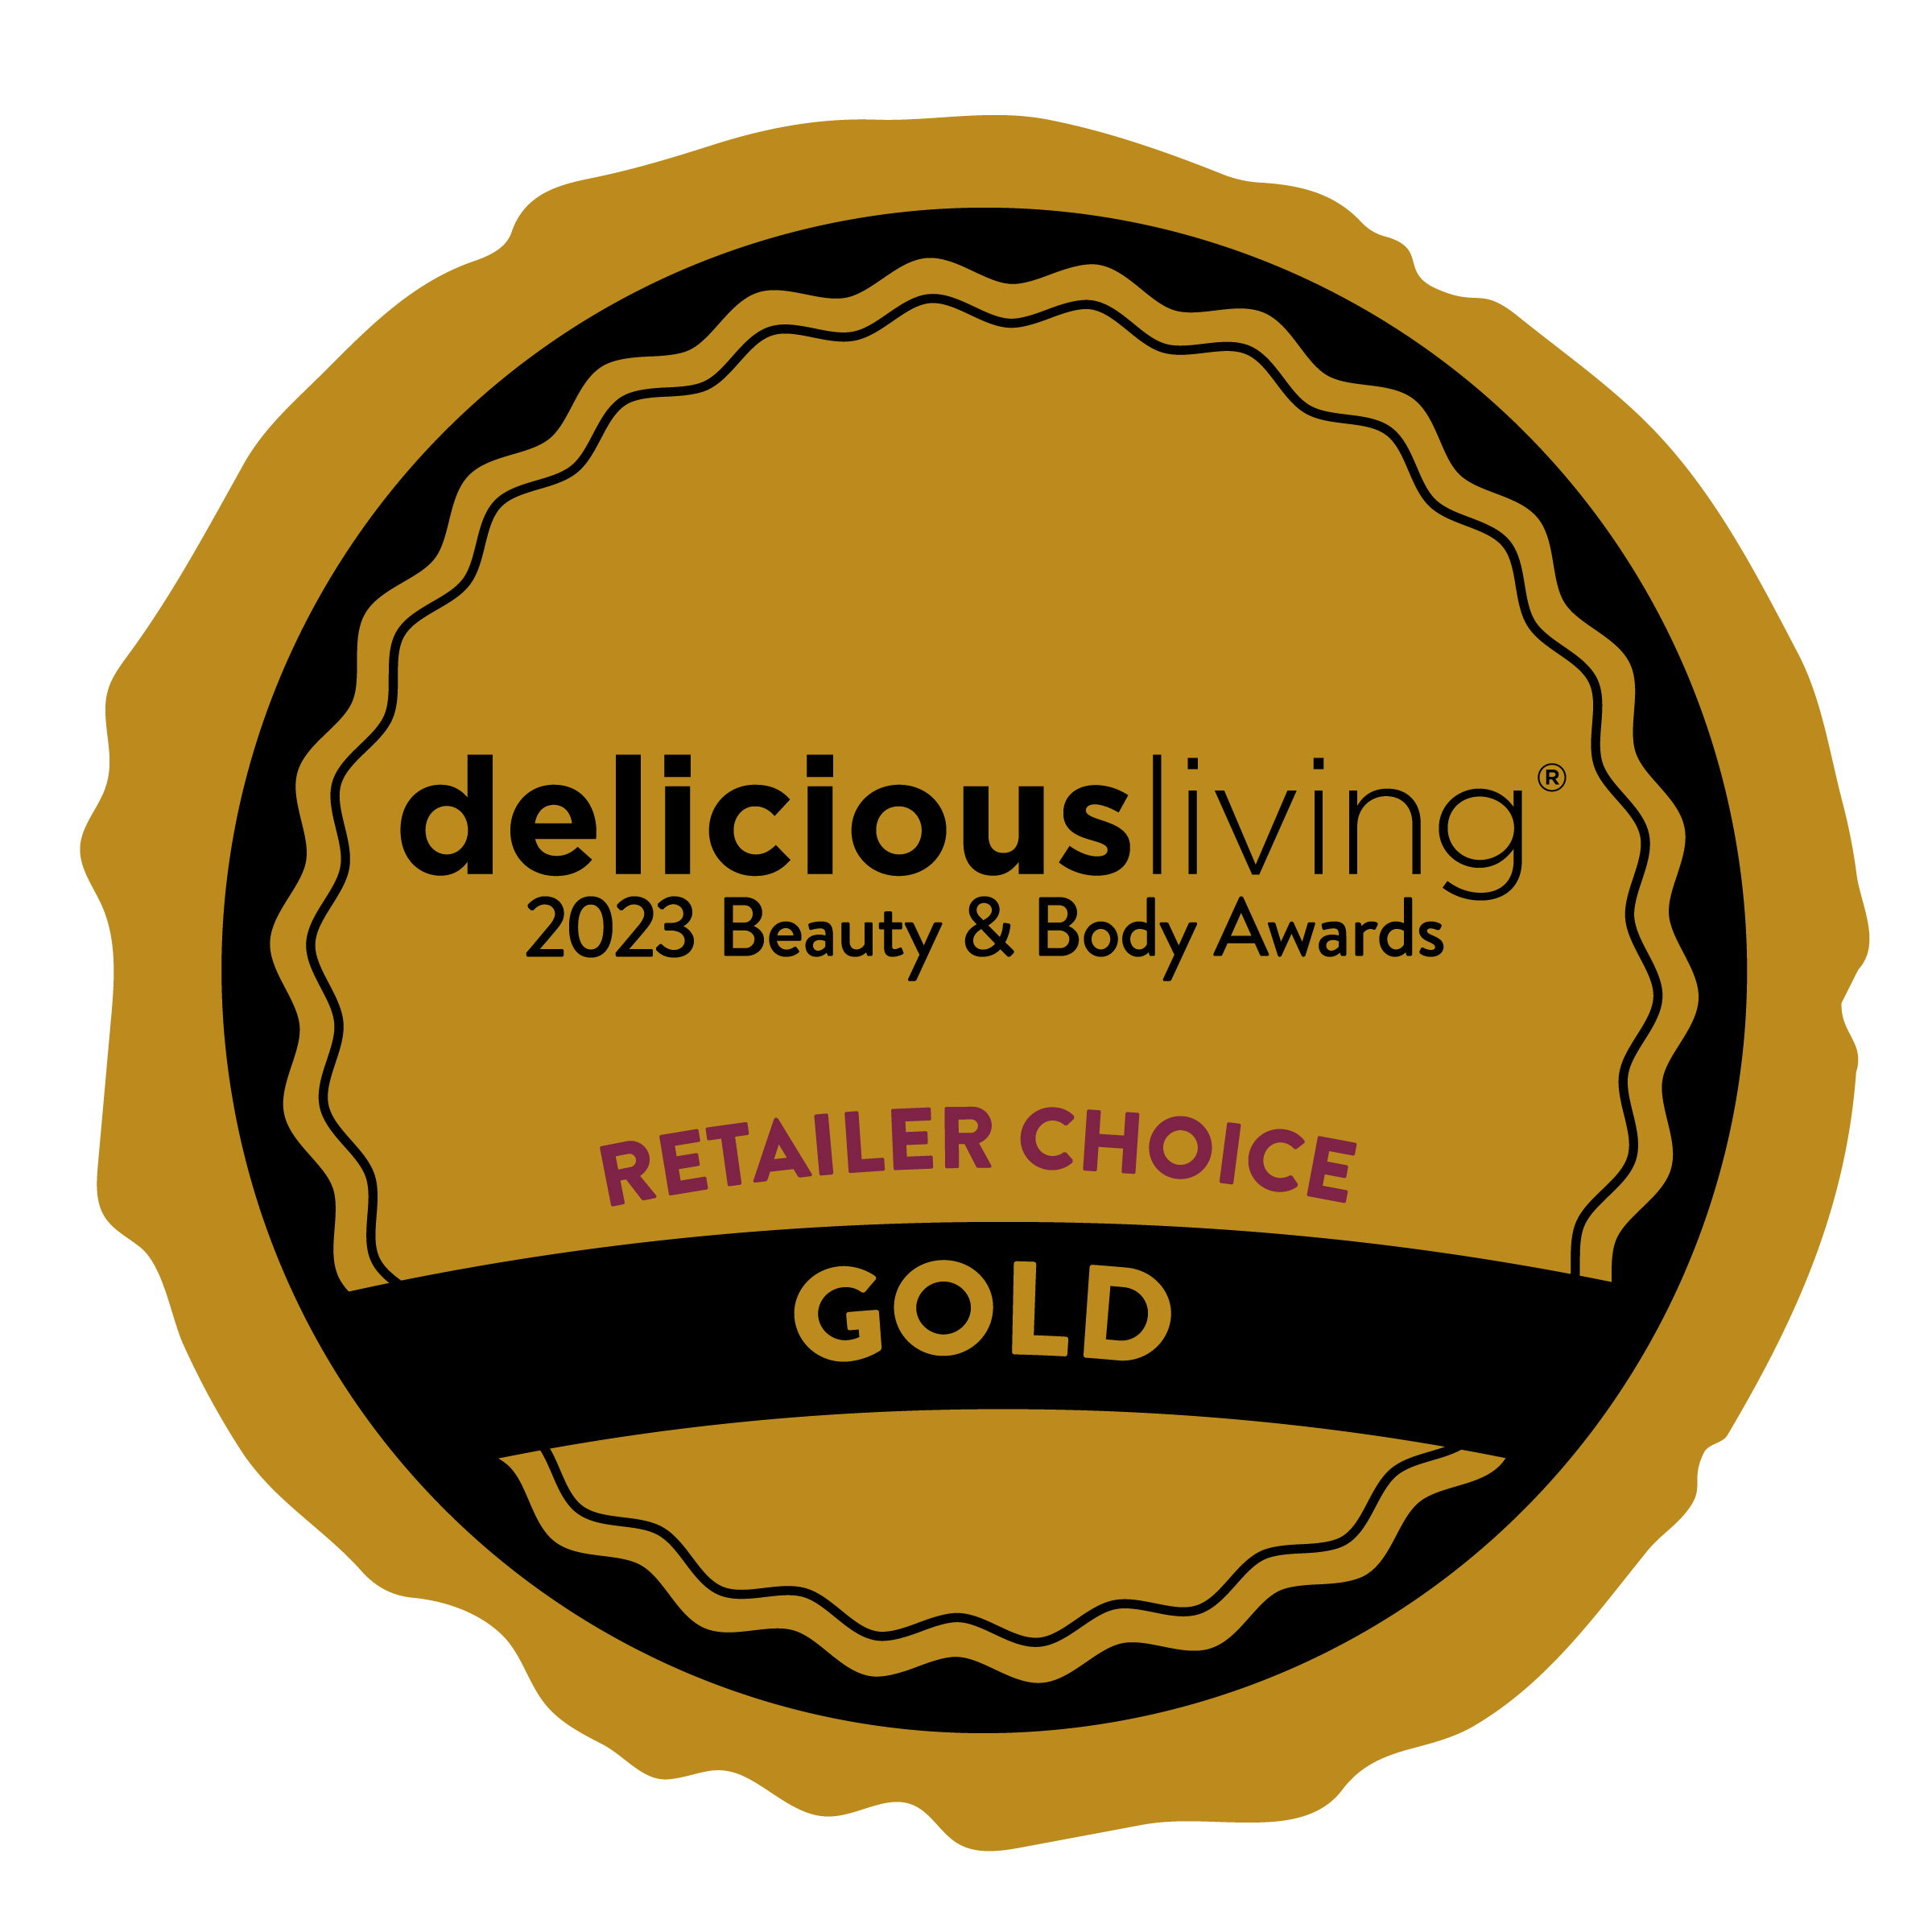 Desert Essence Moringa, Jojoba & Rose Hip Oil Wins Gold in Delicious Living 2023 Body and Beauty Awards - Retailer Facial Moisturizer Category